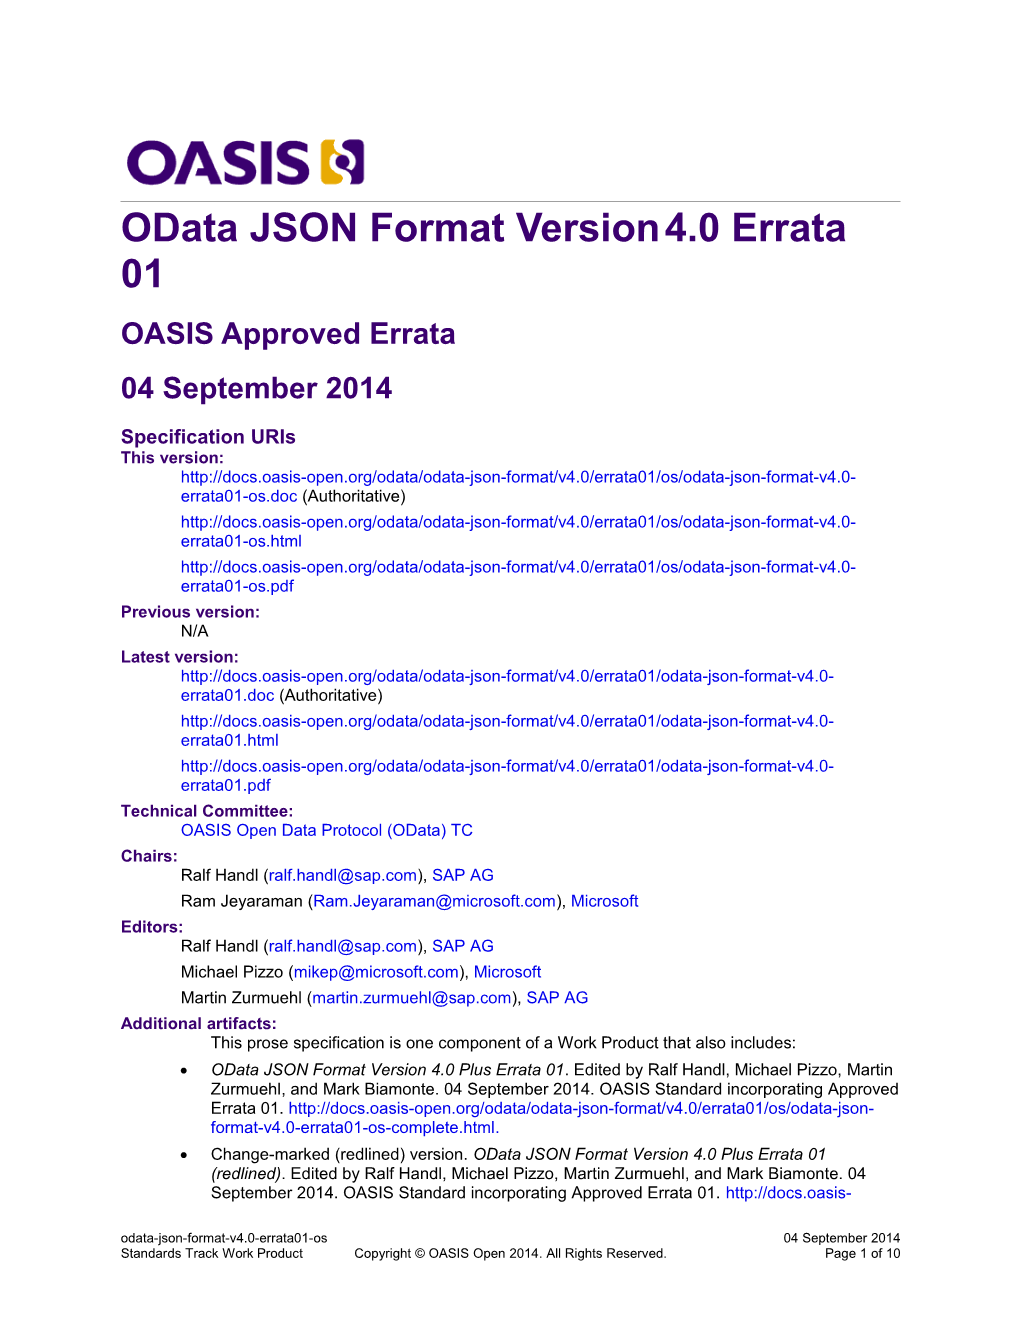 Odata JSON Format Version 4.0 Errata 01